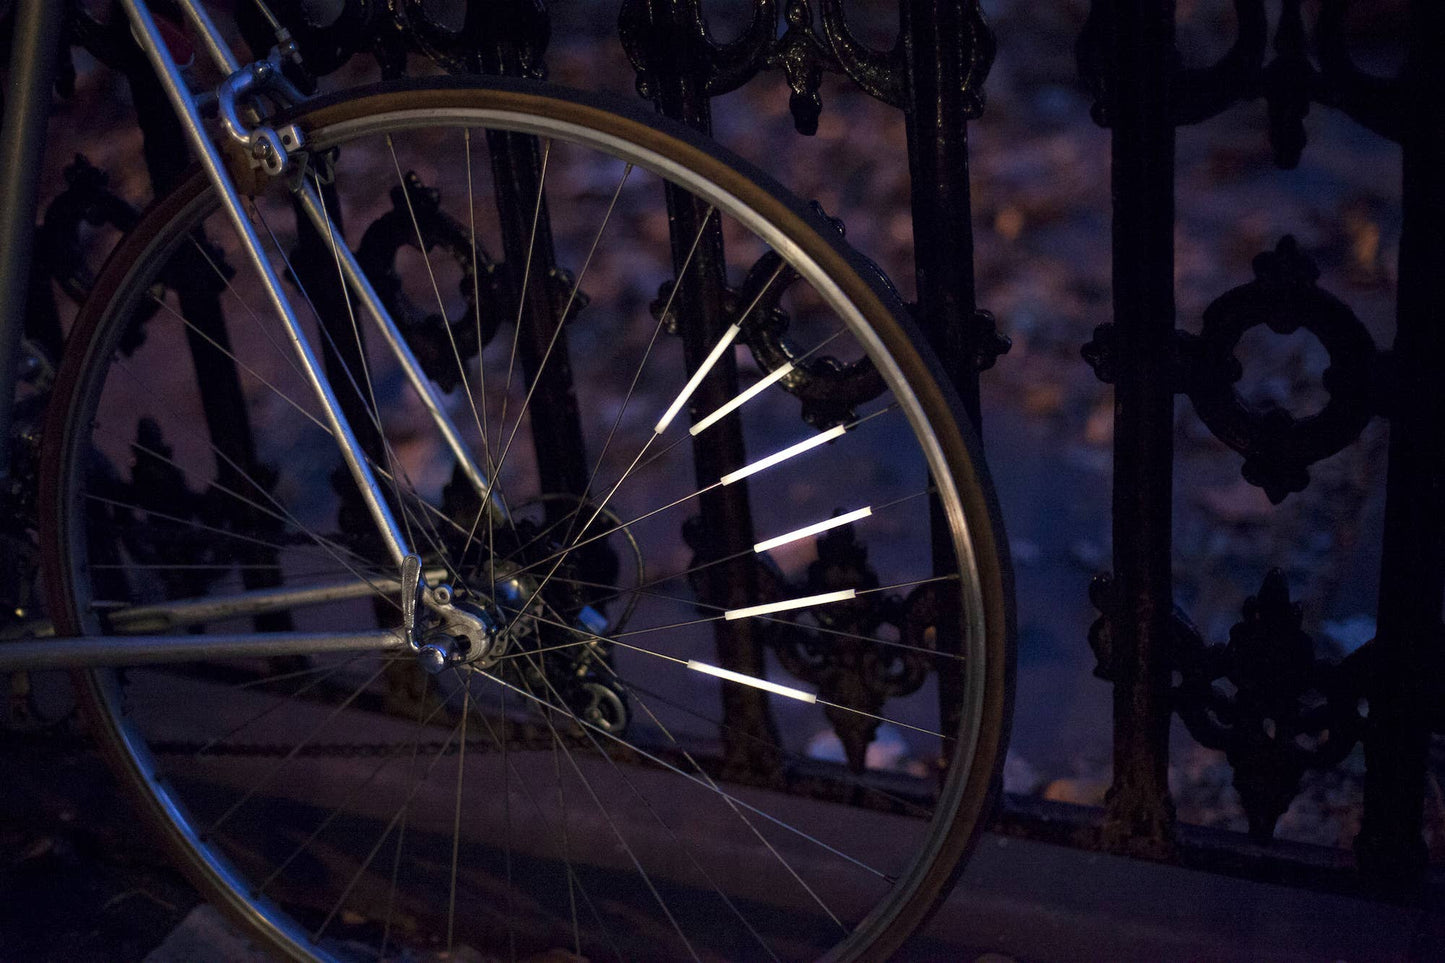 12 Bike Spoke Reflectors